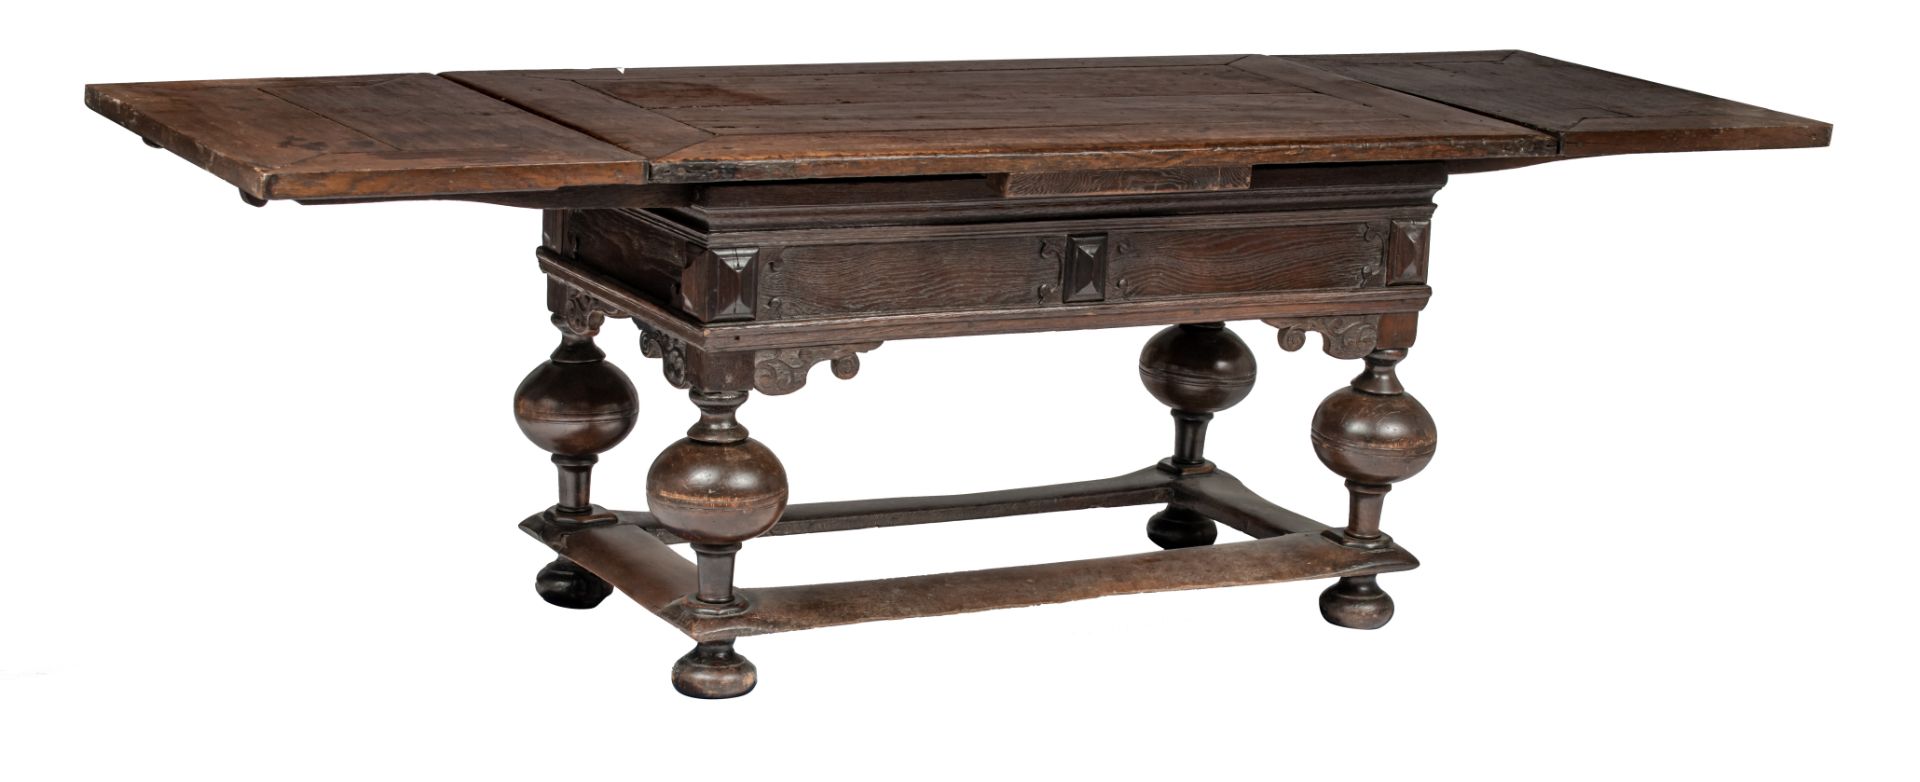 An impressive Flemish or Dutch oak table, early 17thC, H 80 - W 146 - 252 - D 85 cm